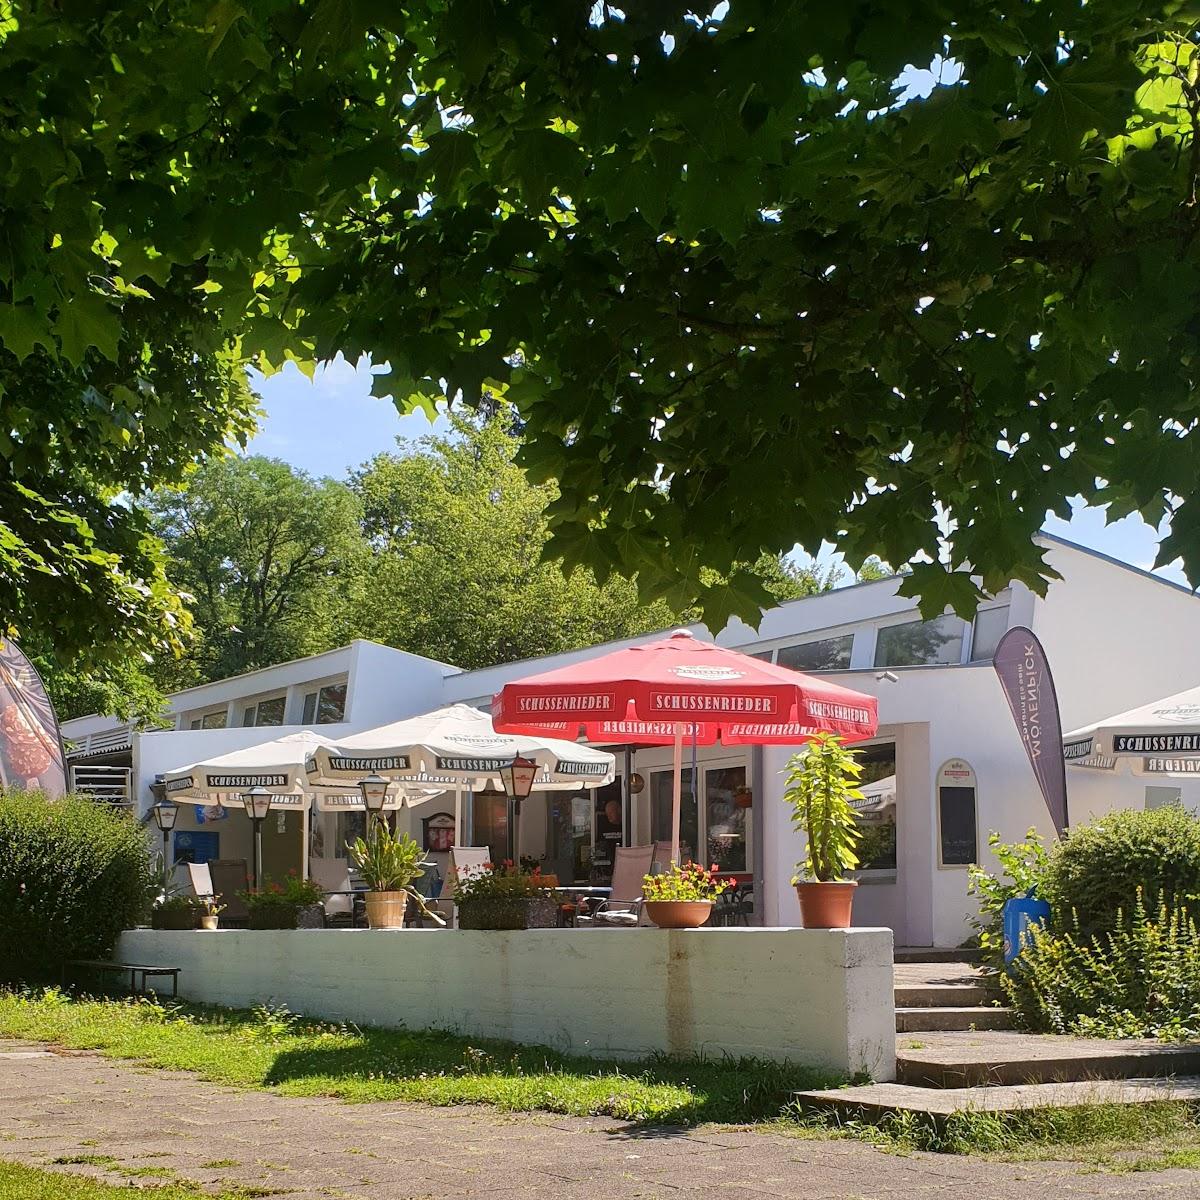 Restaurant "Zellersee Café" in Bad Schussenried